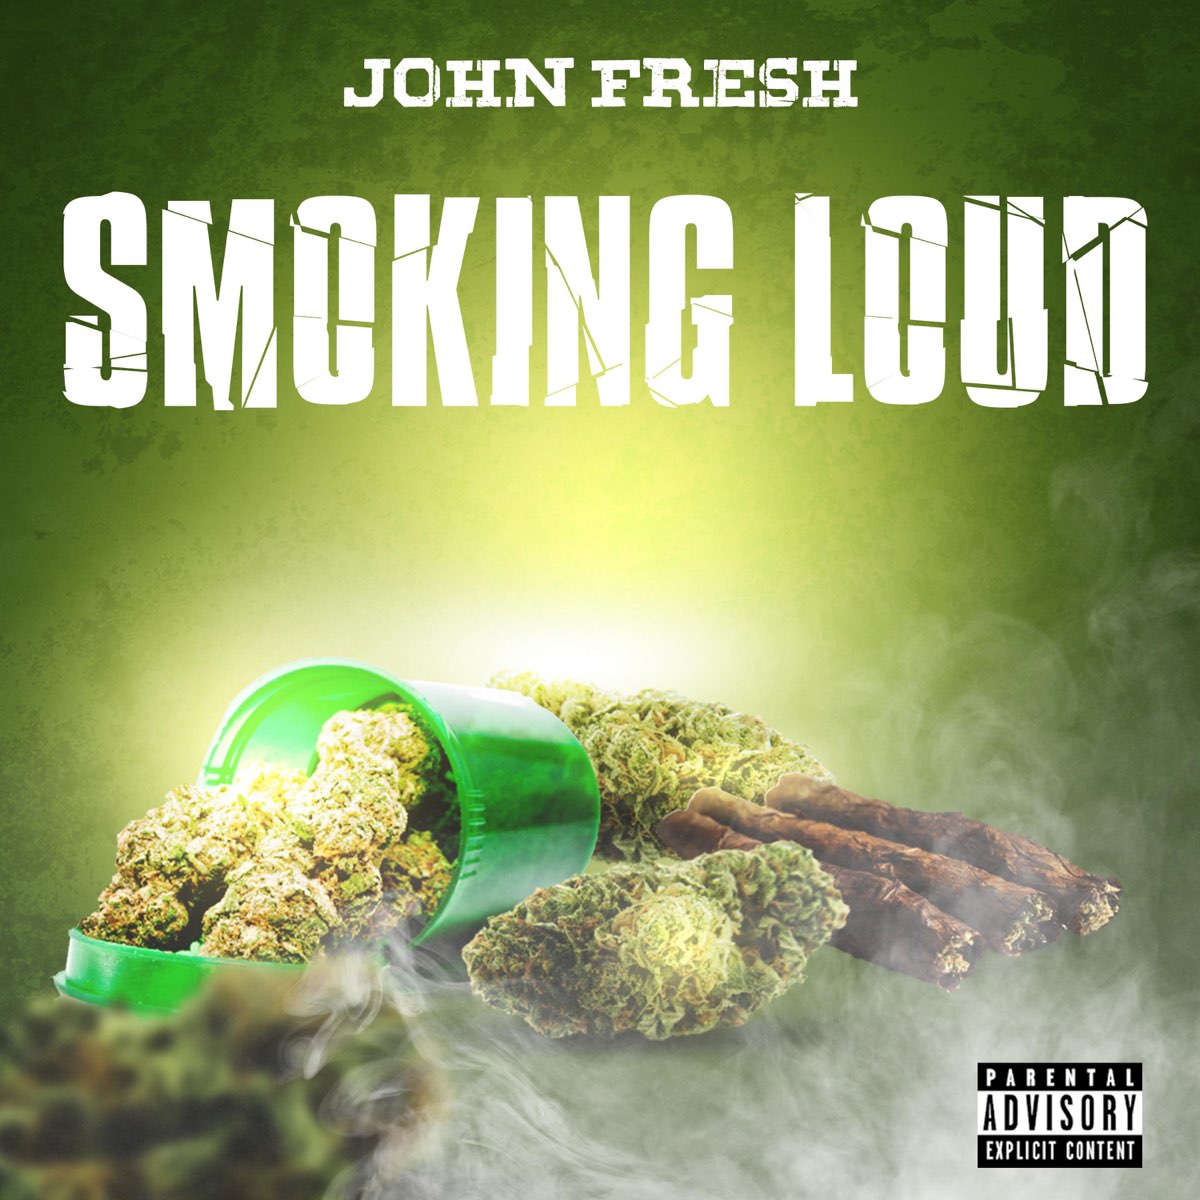 Smoking Loud - Single - Album by John Fresh - Apple Music